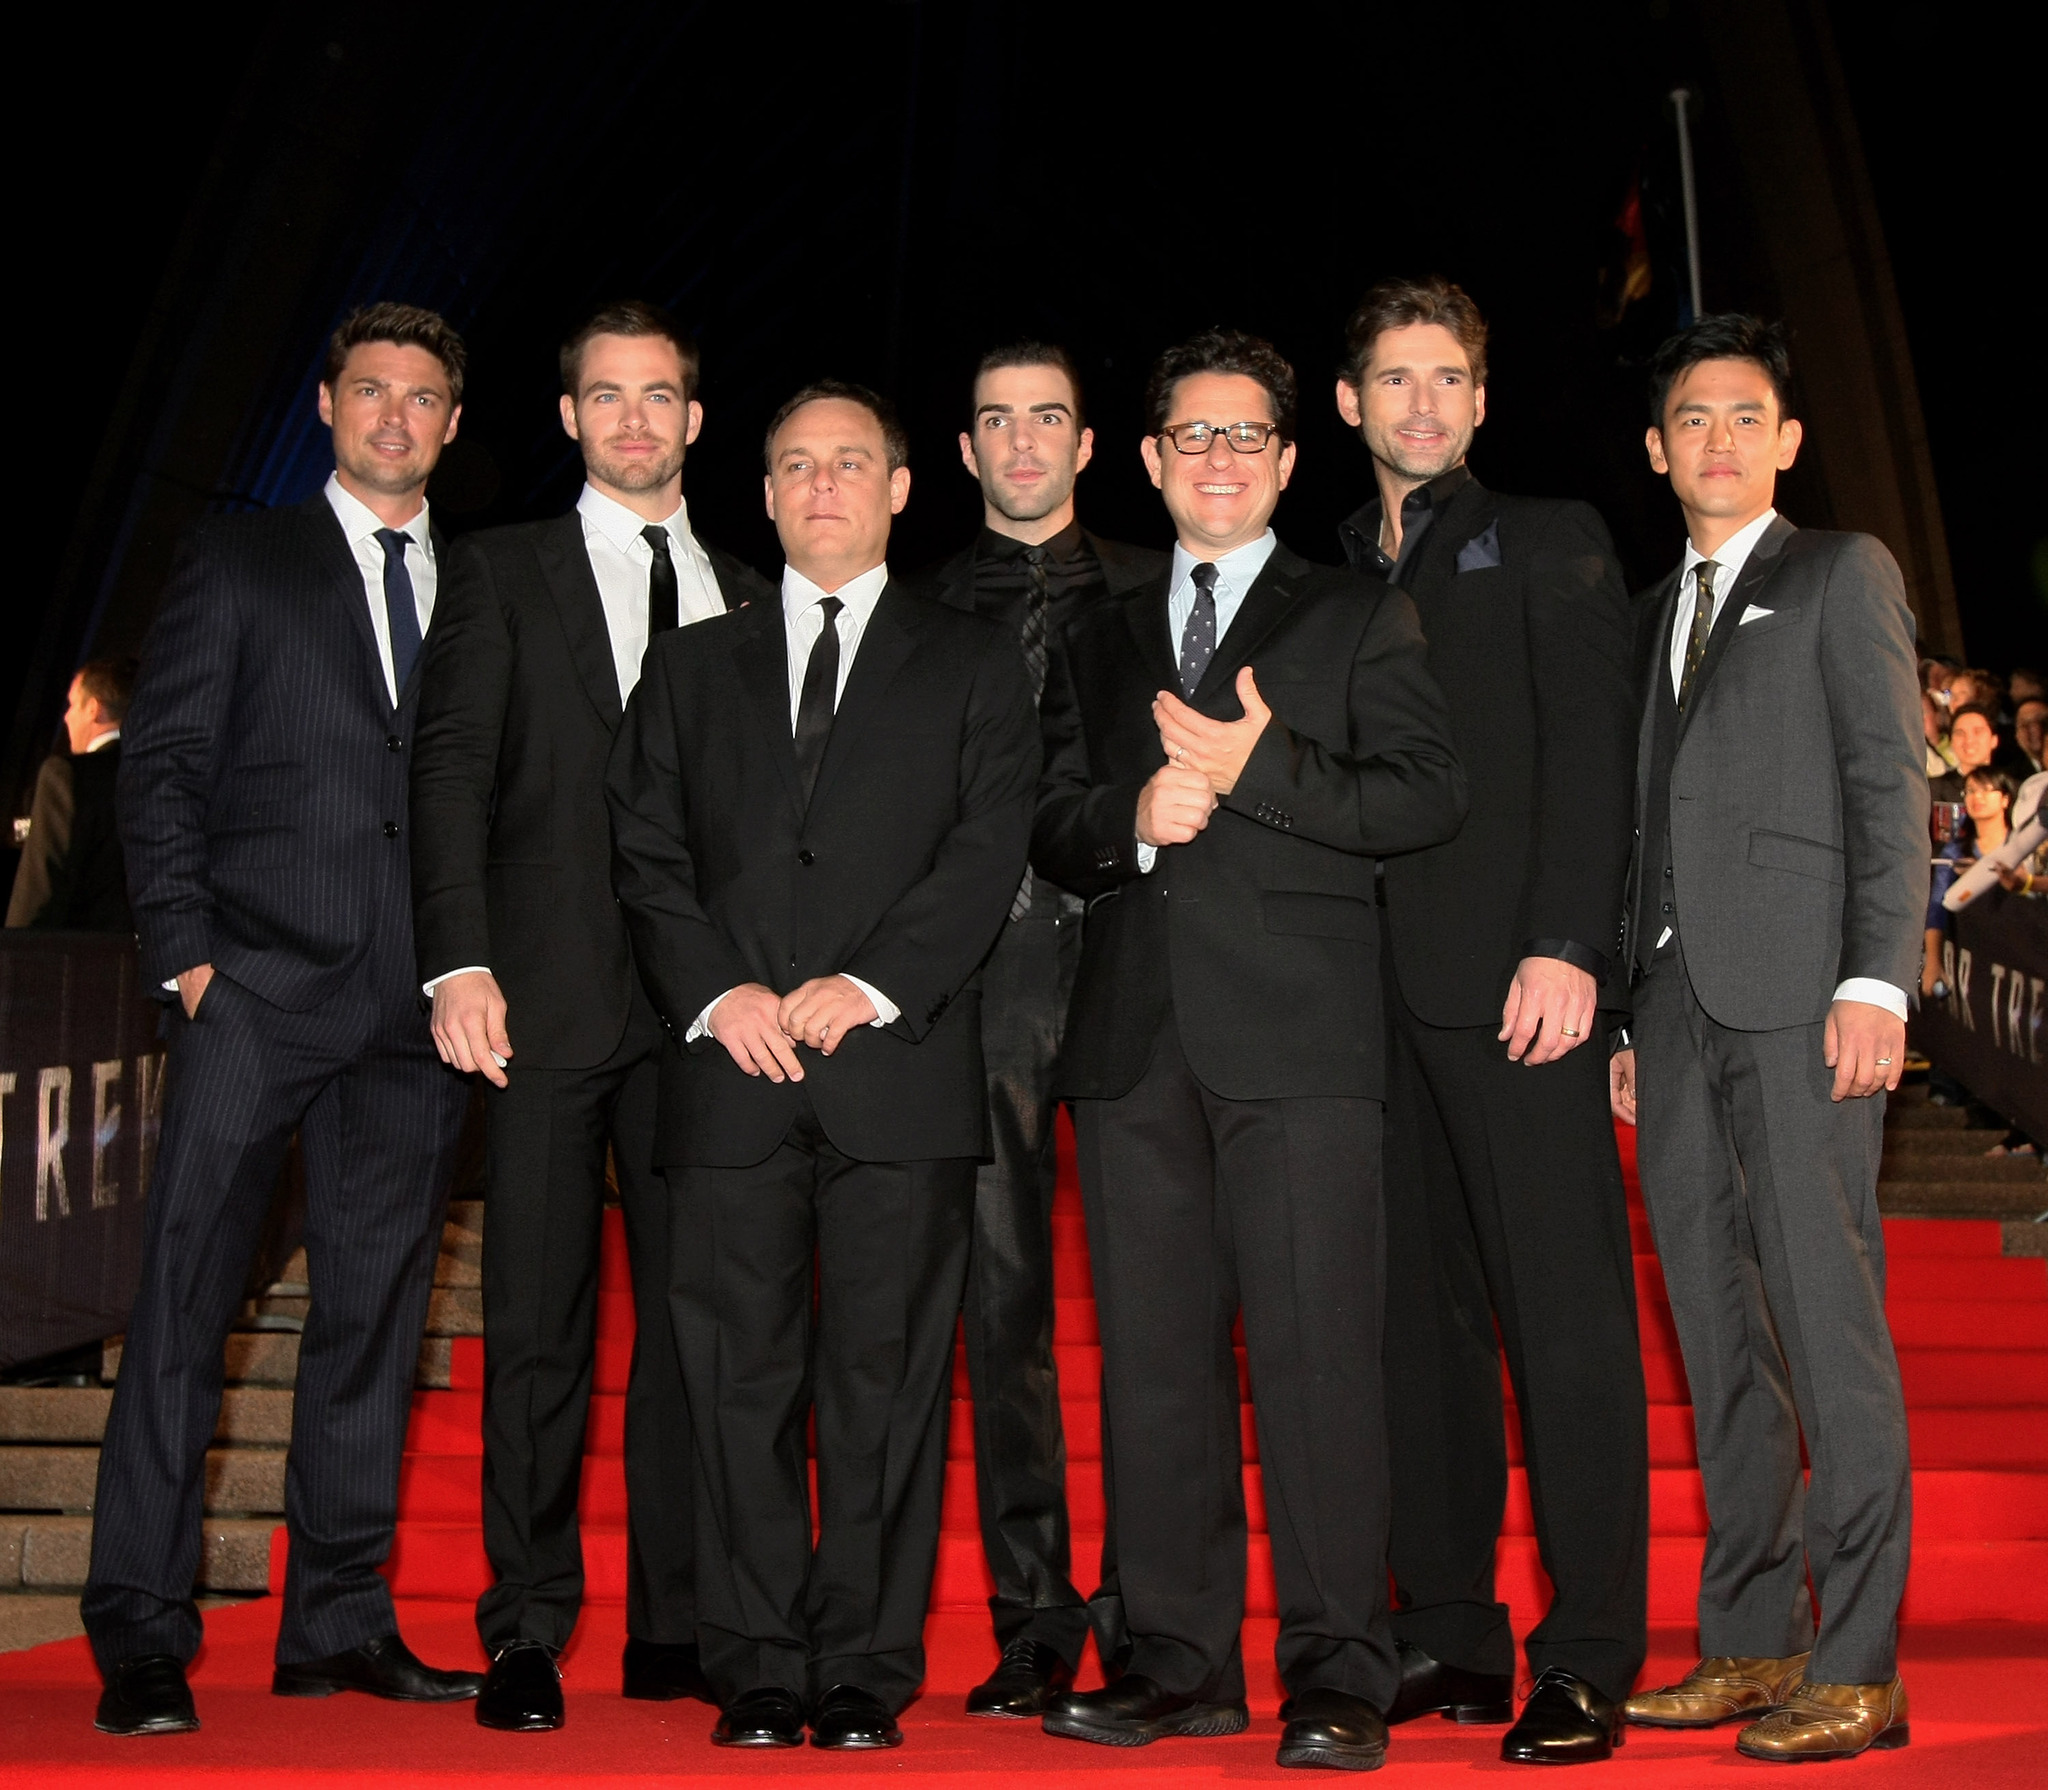 J.J. Abrams, Eric Bana, John Cho, Zachary Quinto, Karl Urban, Bryan Burk and Chris Pine at event of Zvaigzdziu kelias (2009)